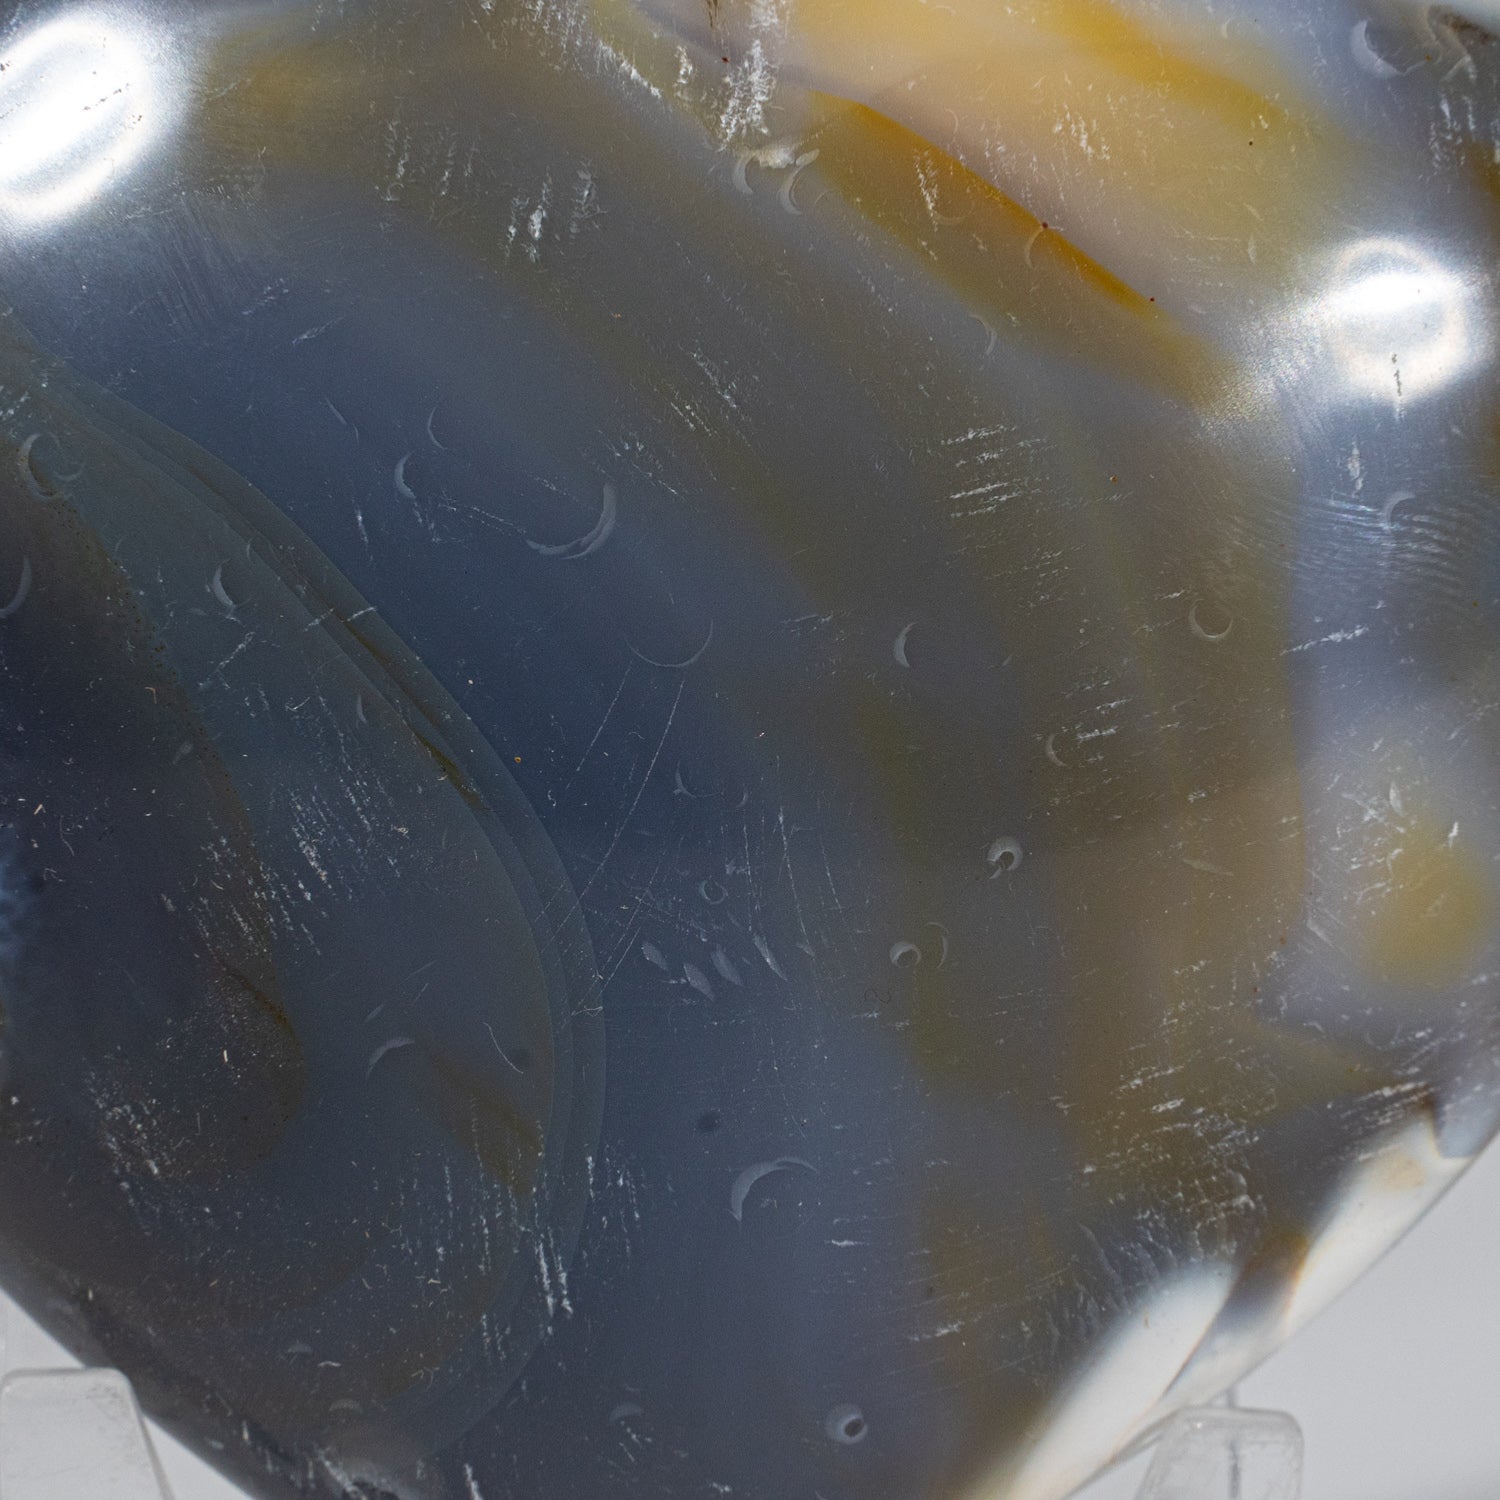 Blue Chalcedony Orca Stone Heart from Madagascar (436.8 grams)